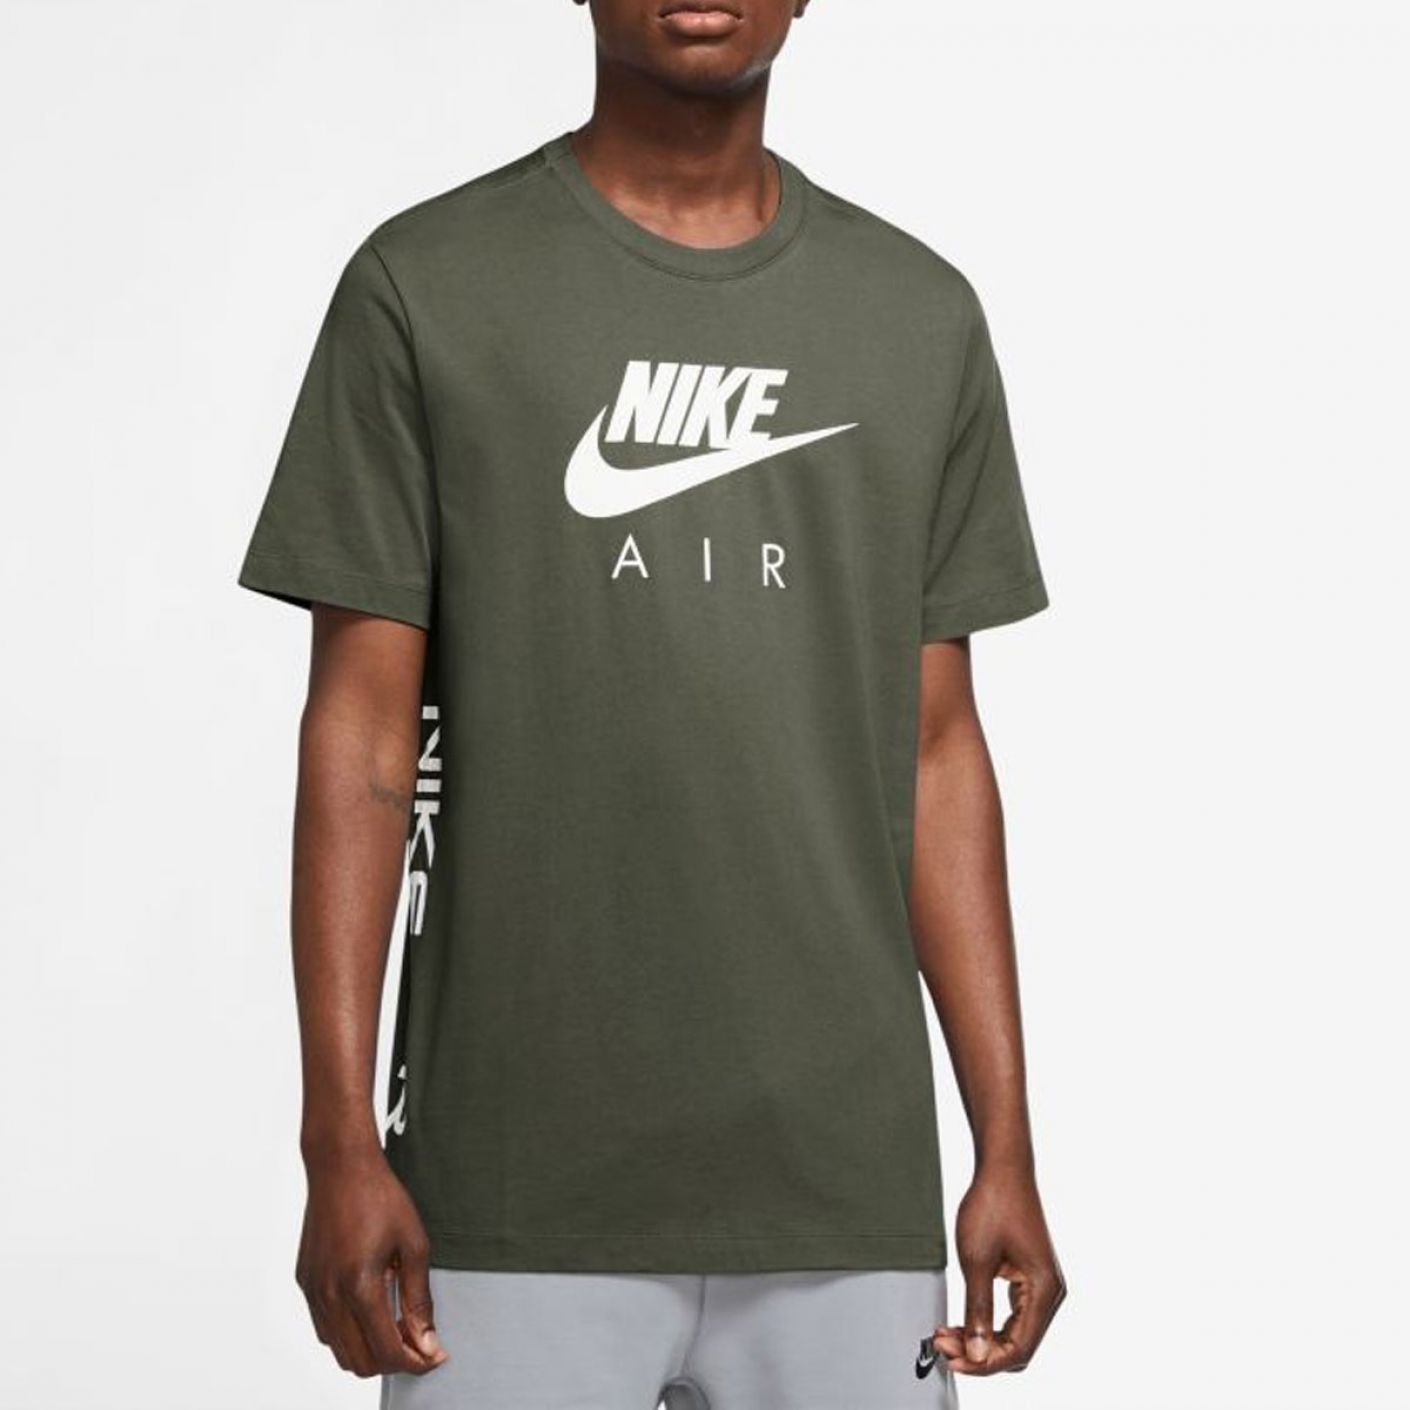 Nike T-shirt Man Tee Air Green for Men